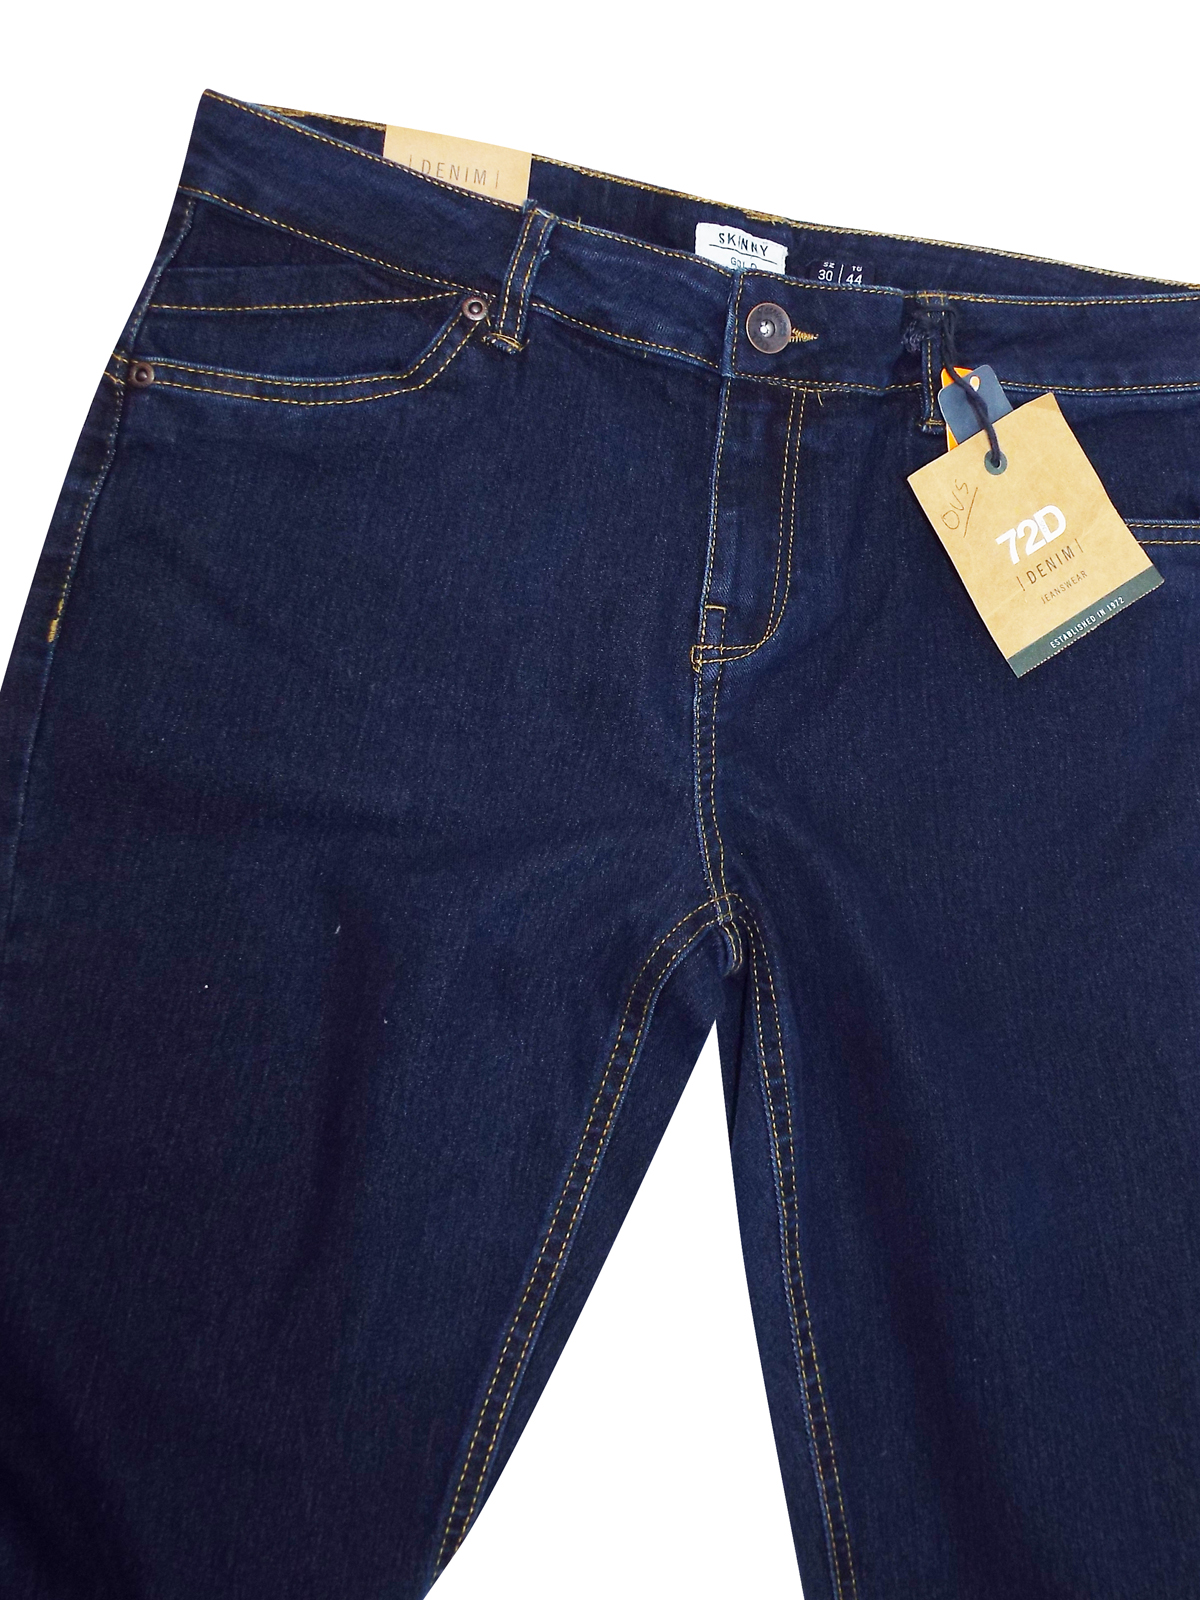 OVS - - OVS INDIGO Cotton Rich 5-Pocket Denim Skinny Jeans - Size 8 to 16